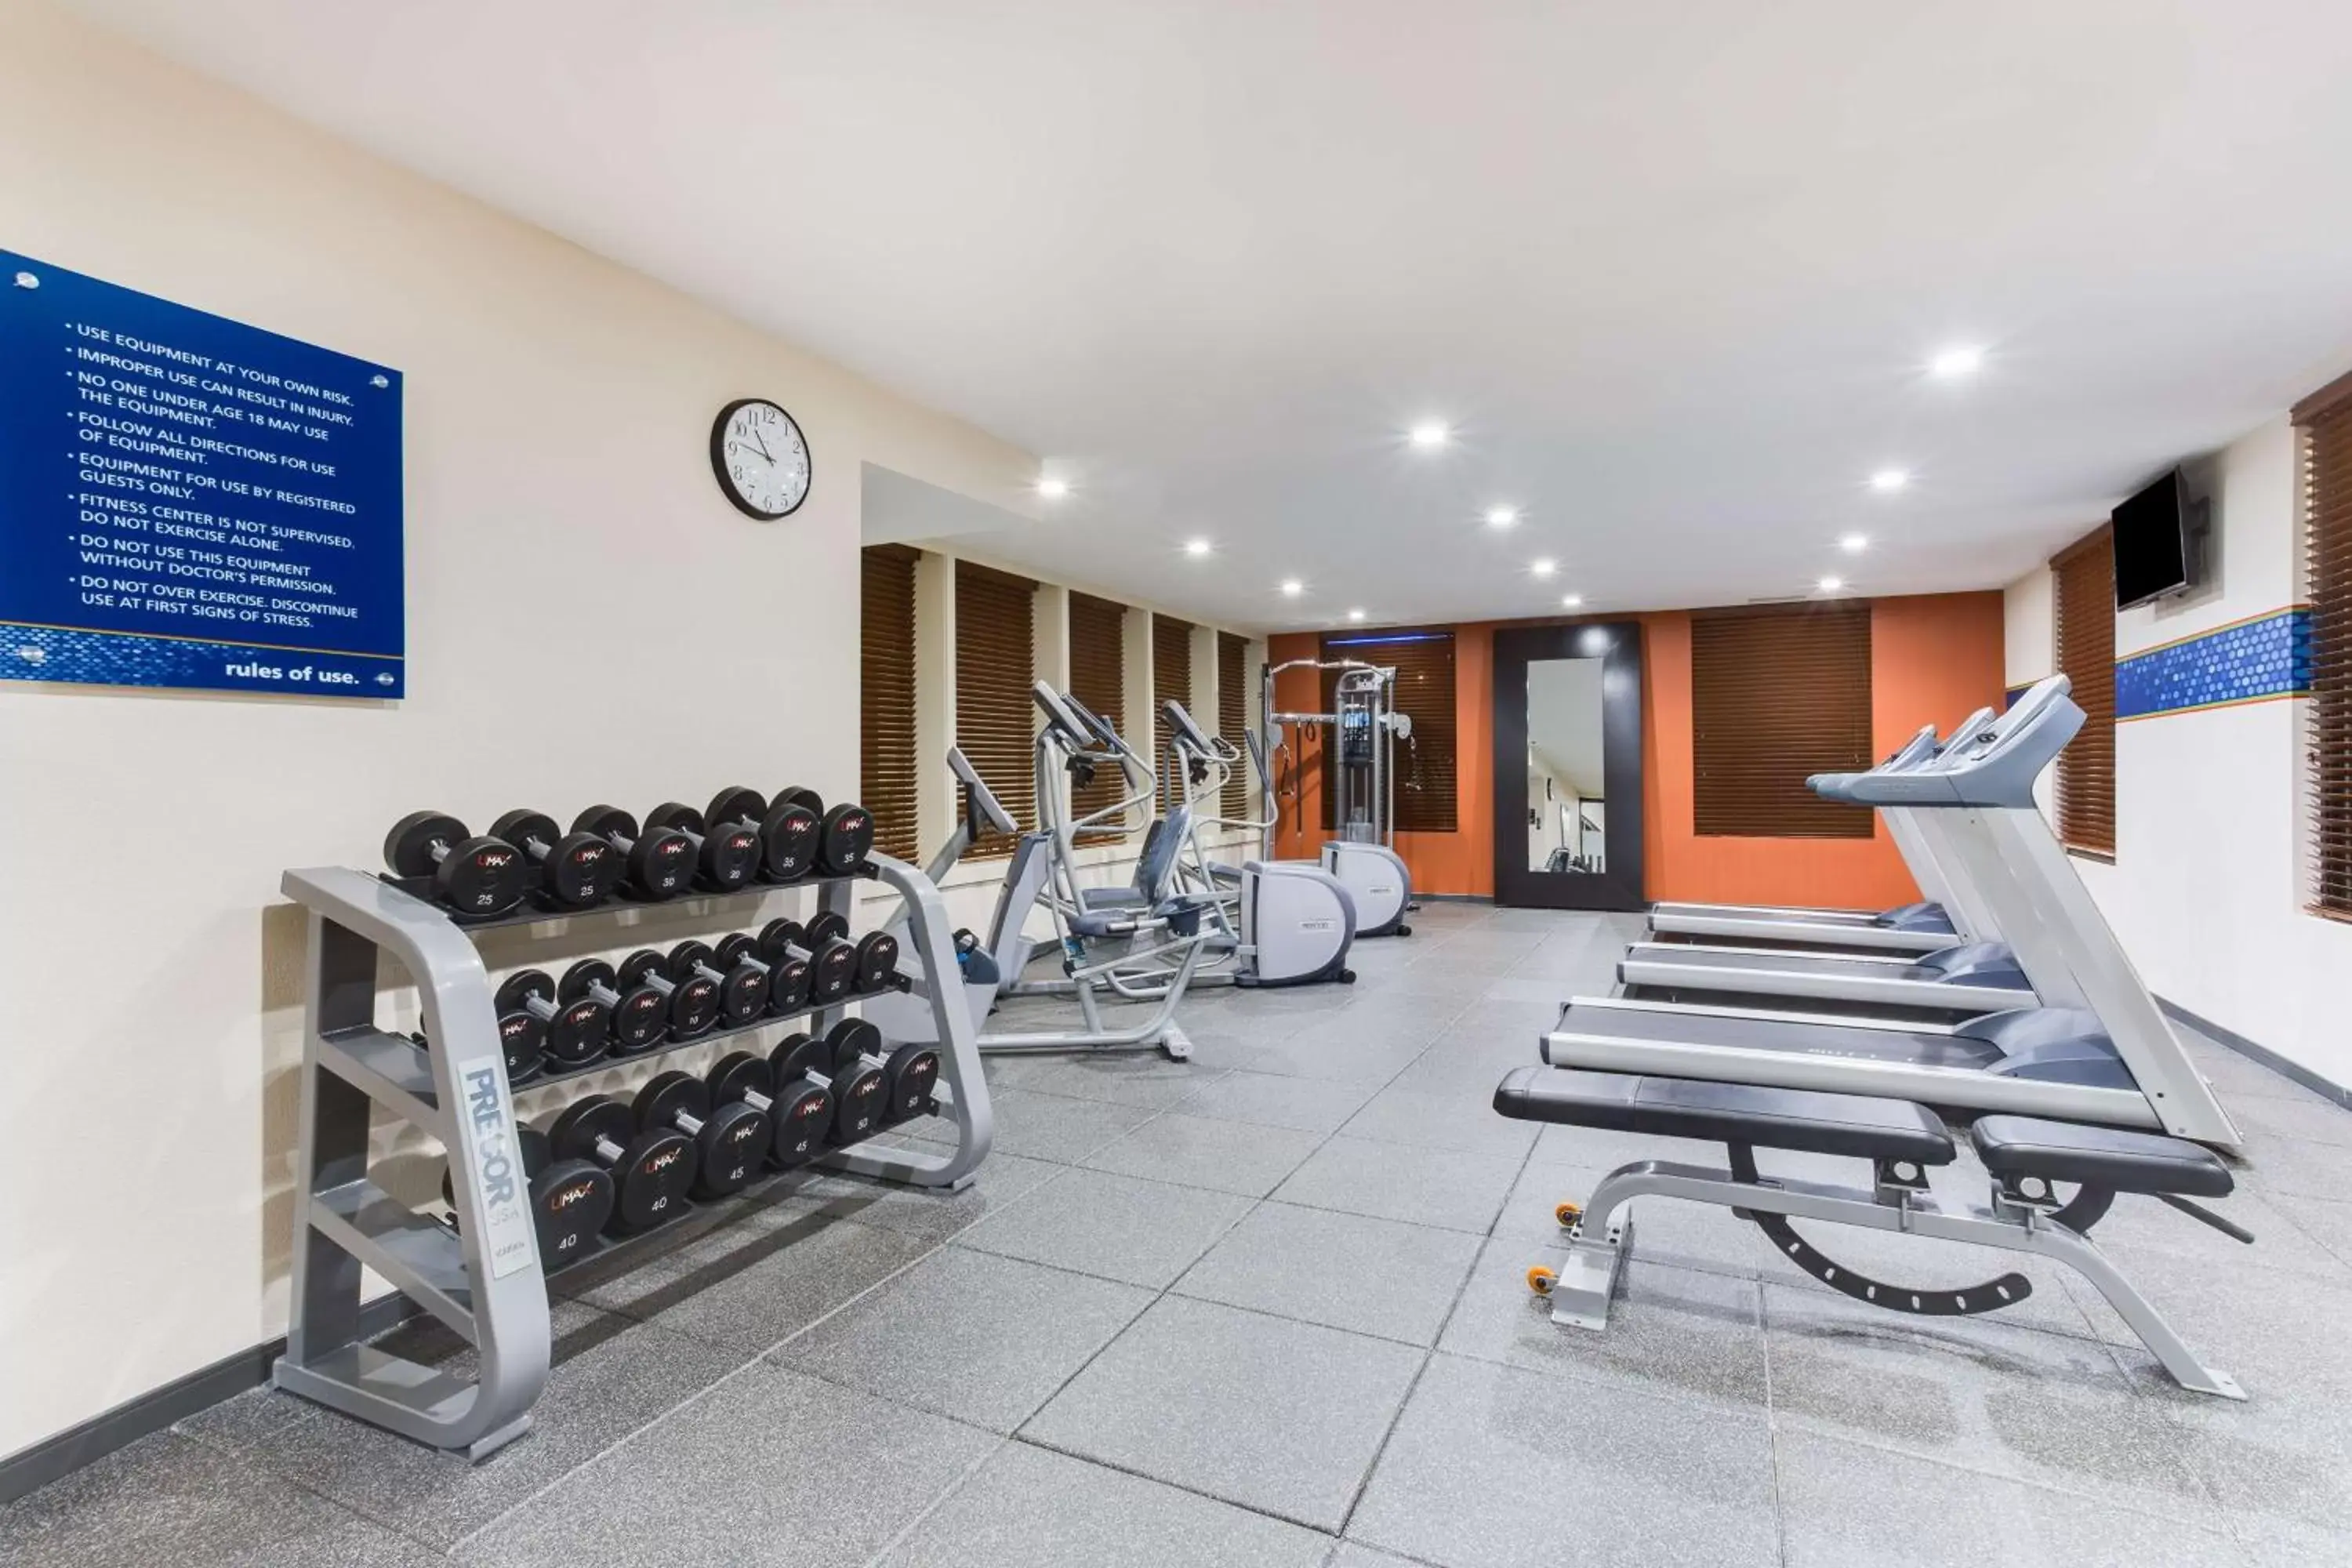 Fitness centre/facilities, Fitness Center/Facilities in Hampton Inn Norcross